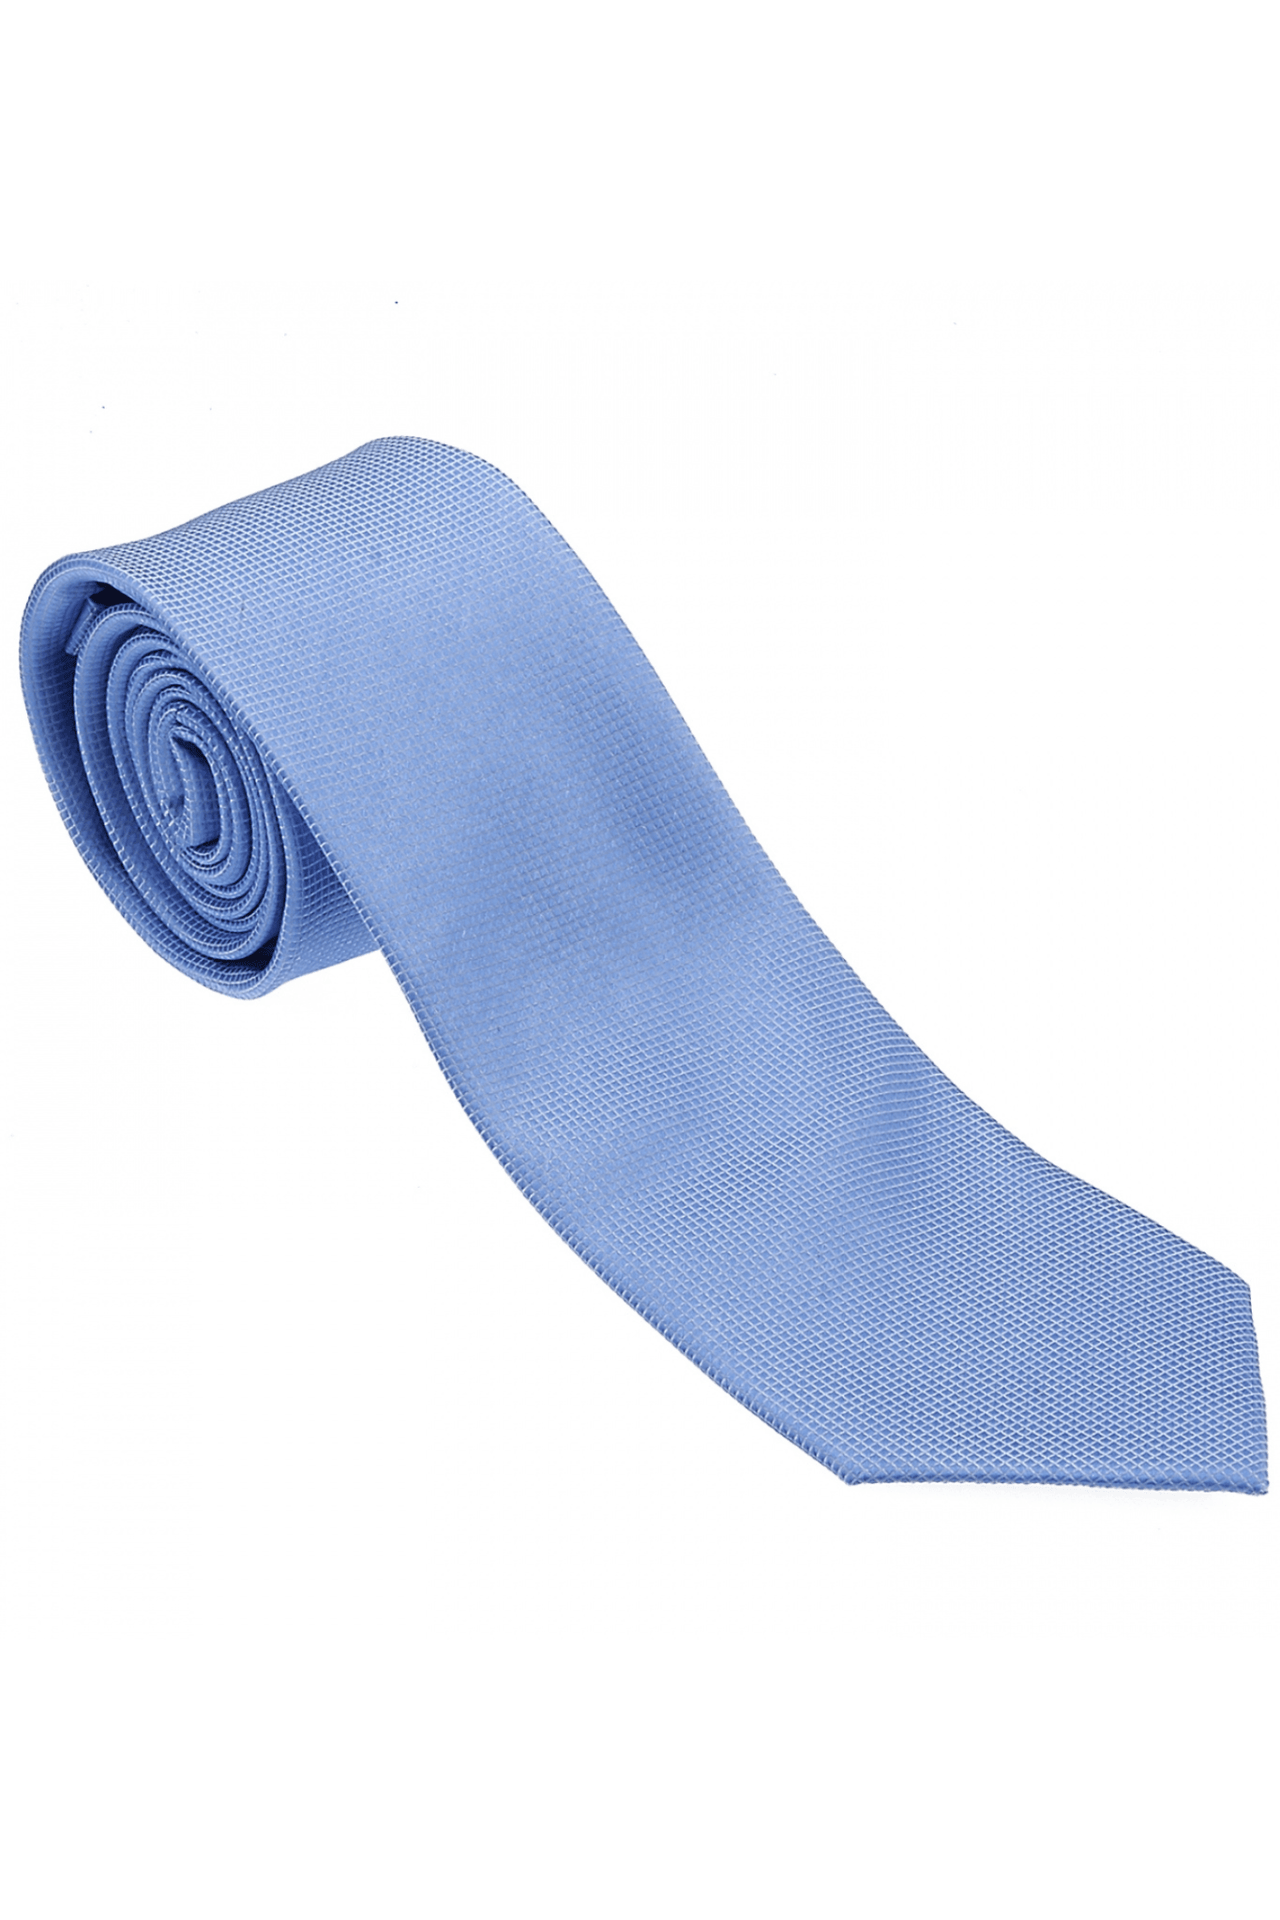 100% Woven Silk Blue Tie - Tomasso Black